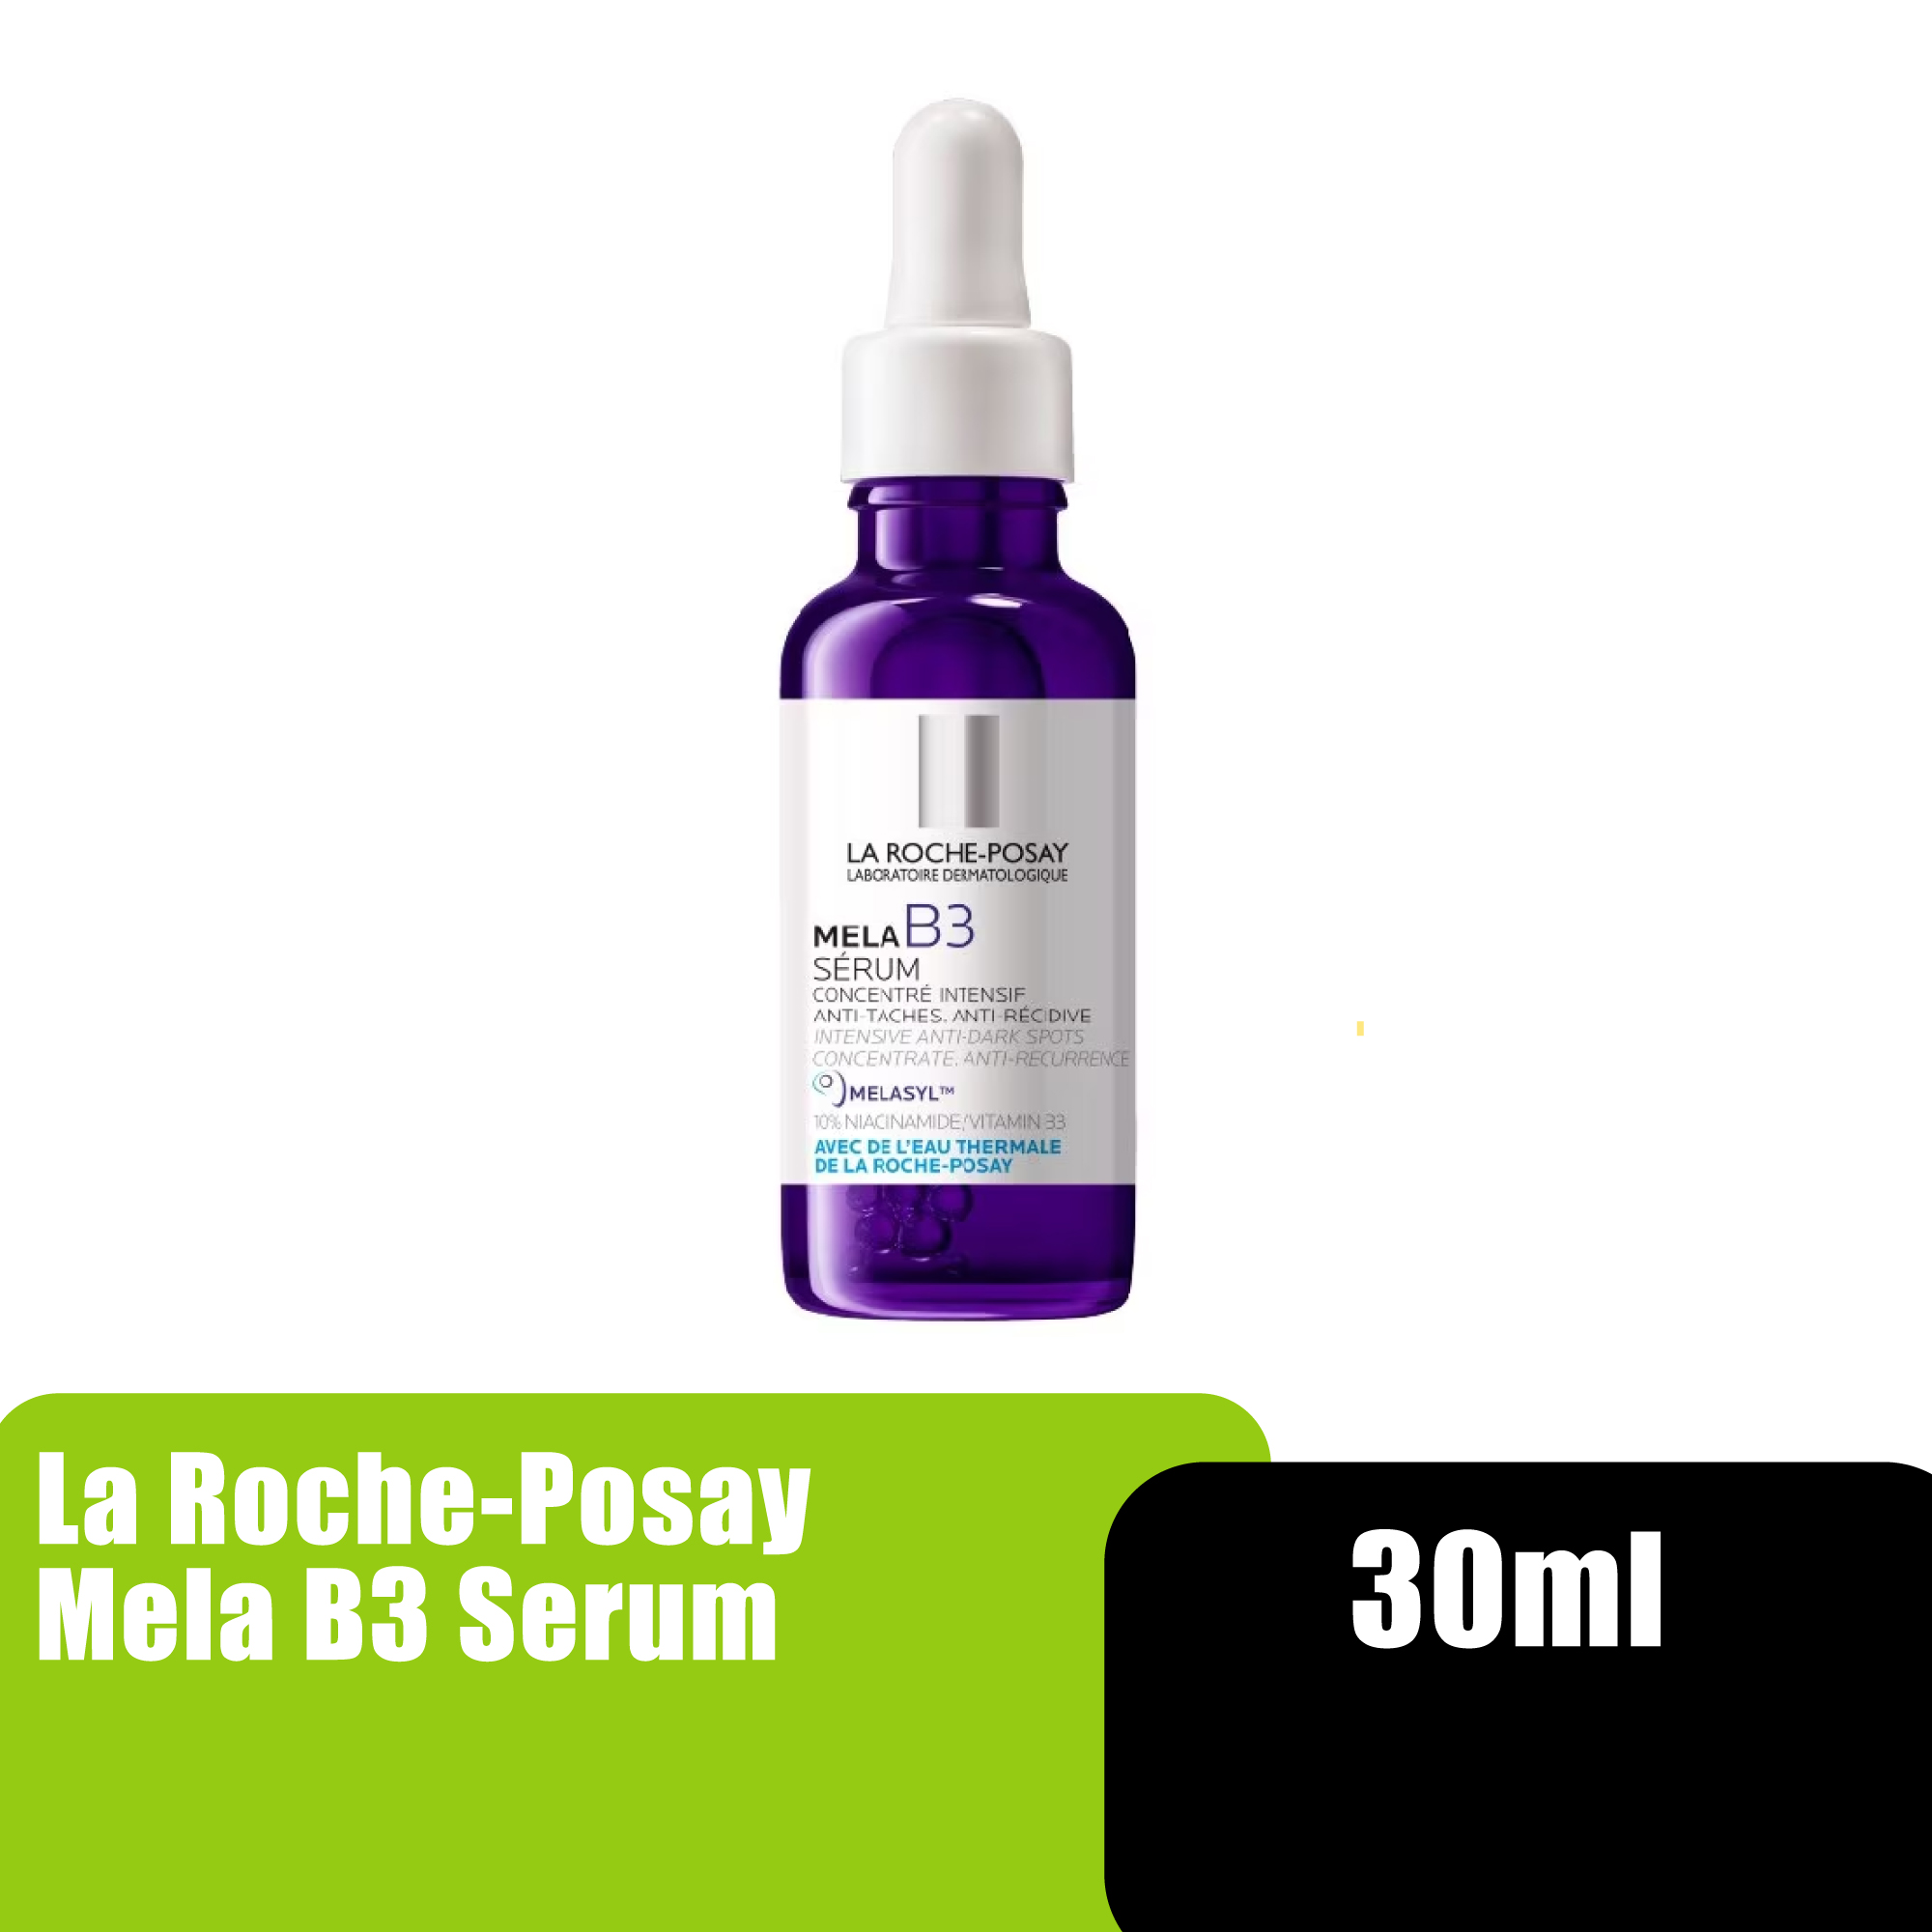 LA ROCHE POSAY Serum Mela B3 (30ml) with Melasyl for Anti Aging, Anti Wrinkle Dark Spot Serum, Skin Barrier Serum, 美白淡斑